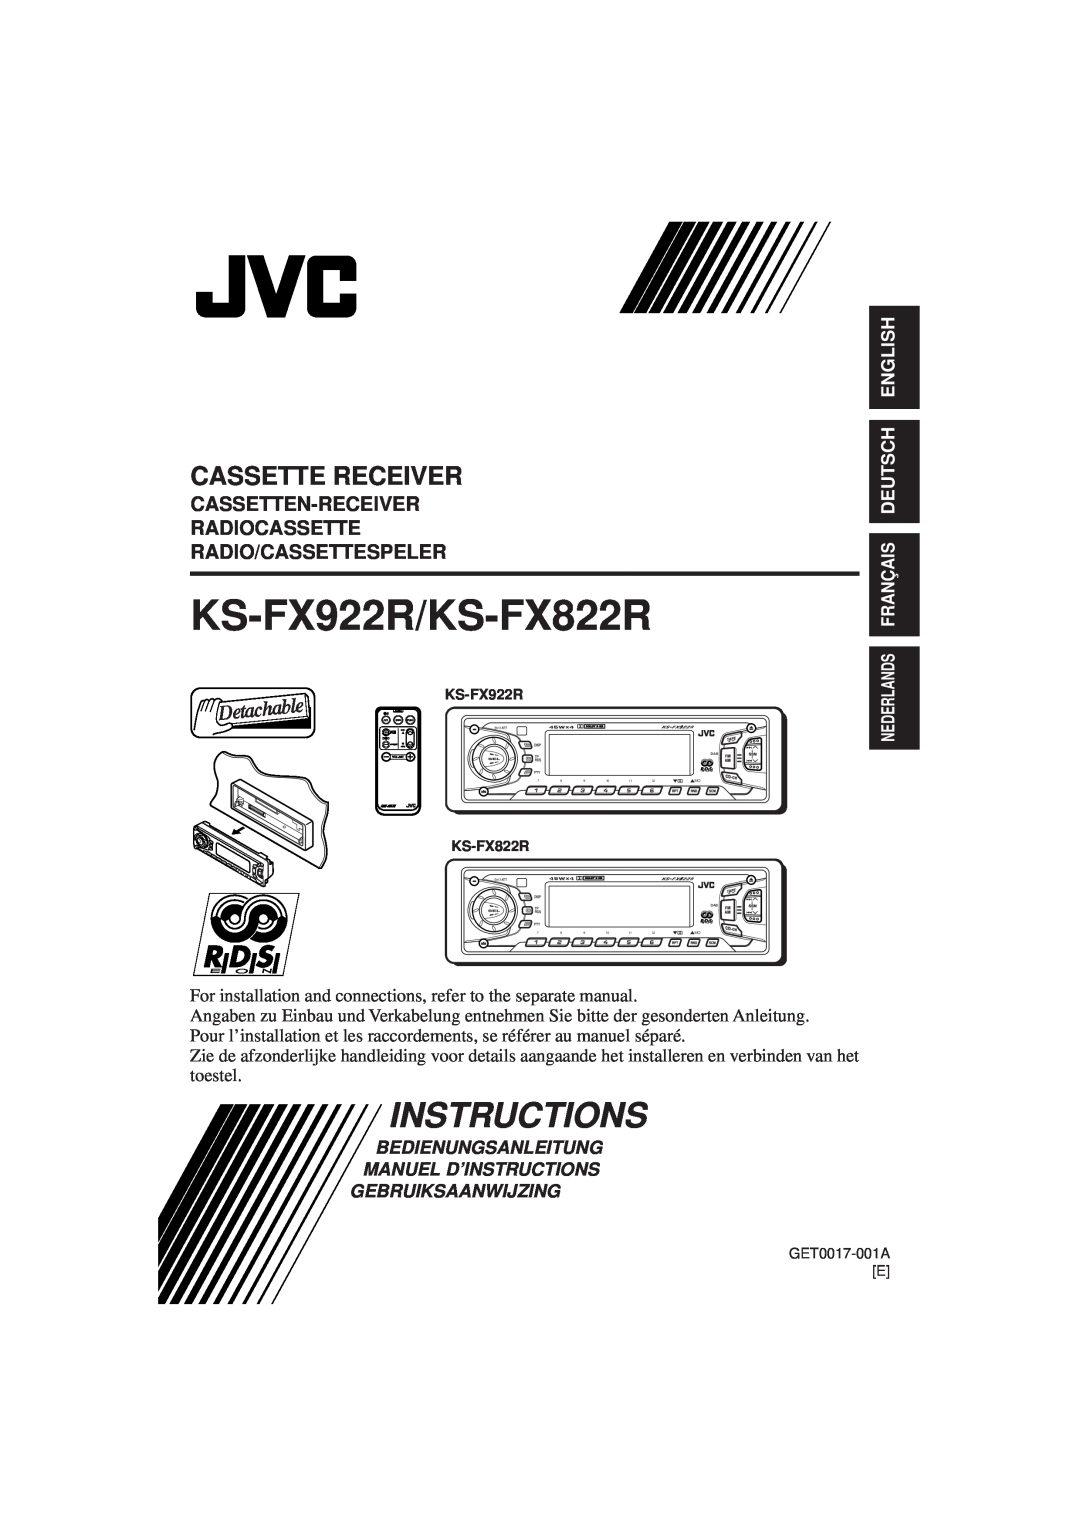 JVC manual Cassette Receiver, Cassetten-Receiver Radiocassette, Radio/Cassettespeler, KS-FX922R/KS-FX822R, Instructions 